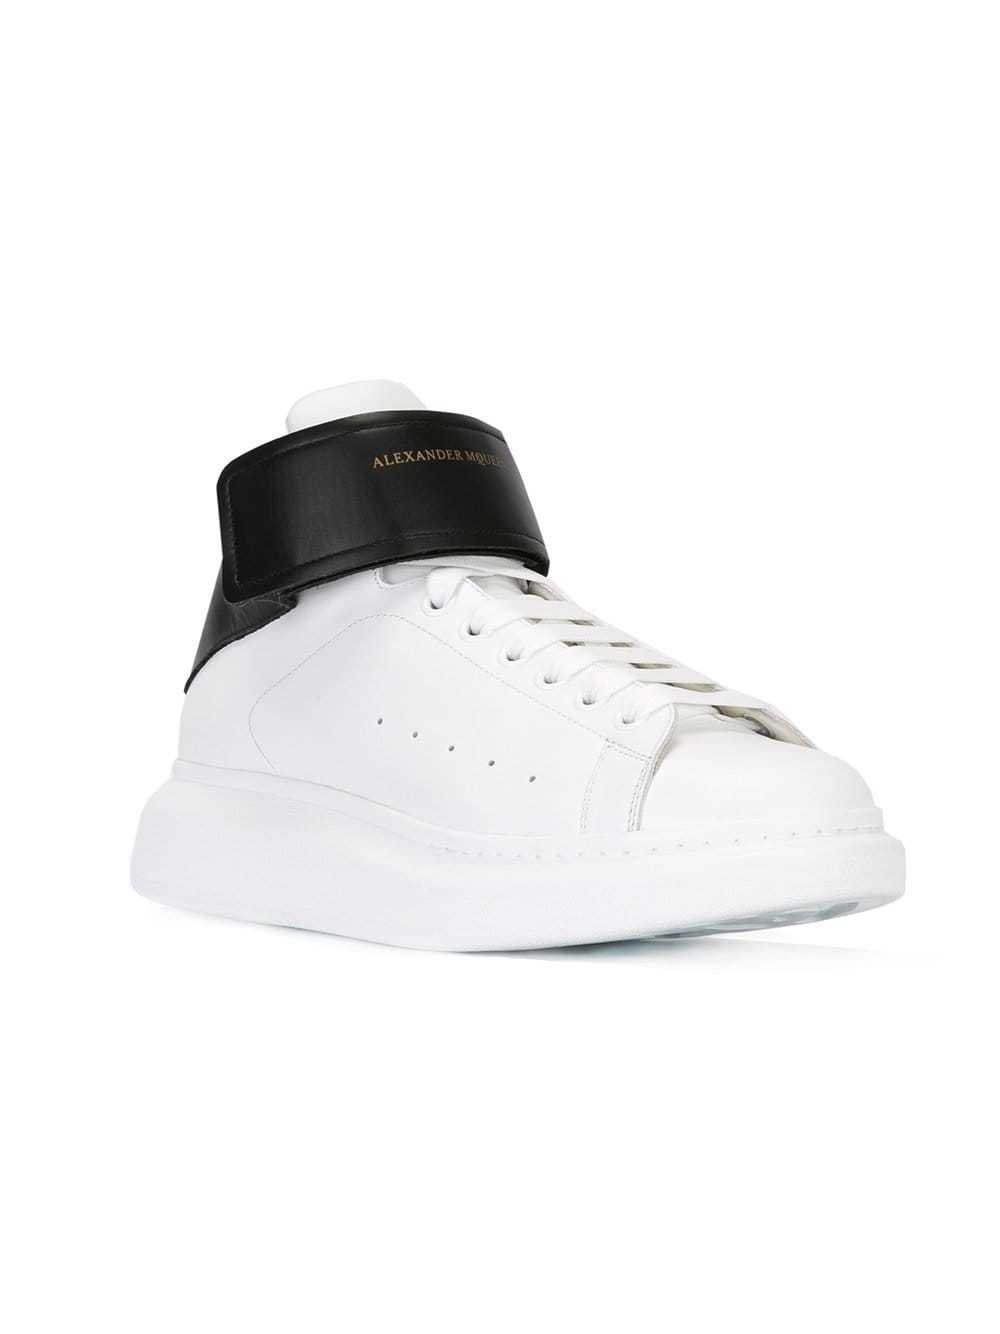 Alexander McQueen Oversized Sneakers, $496, farfetch.com